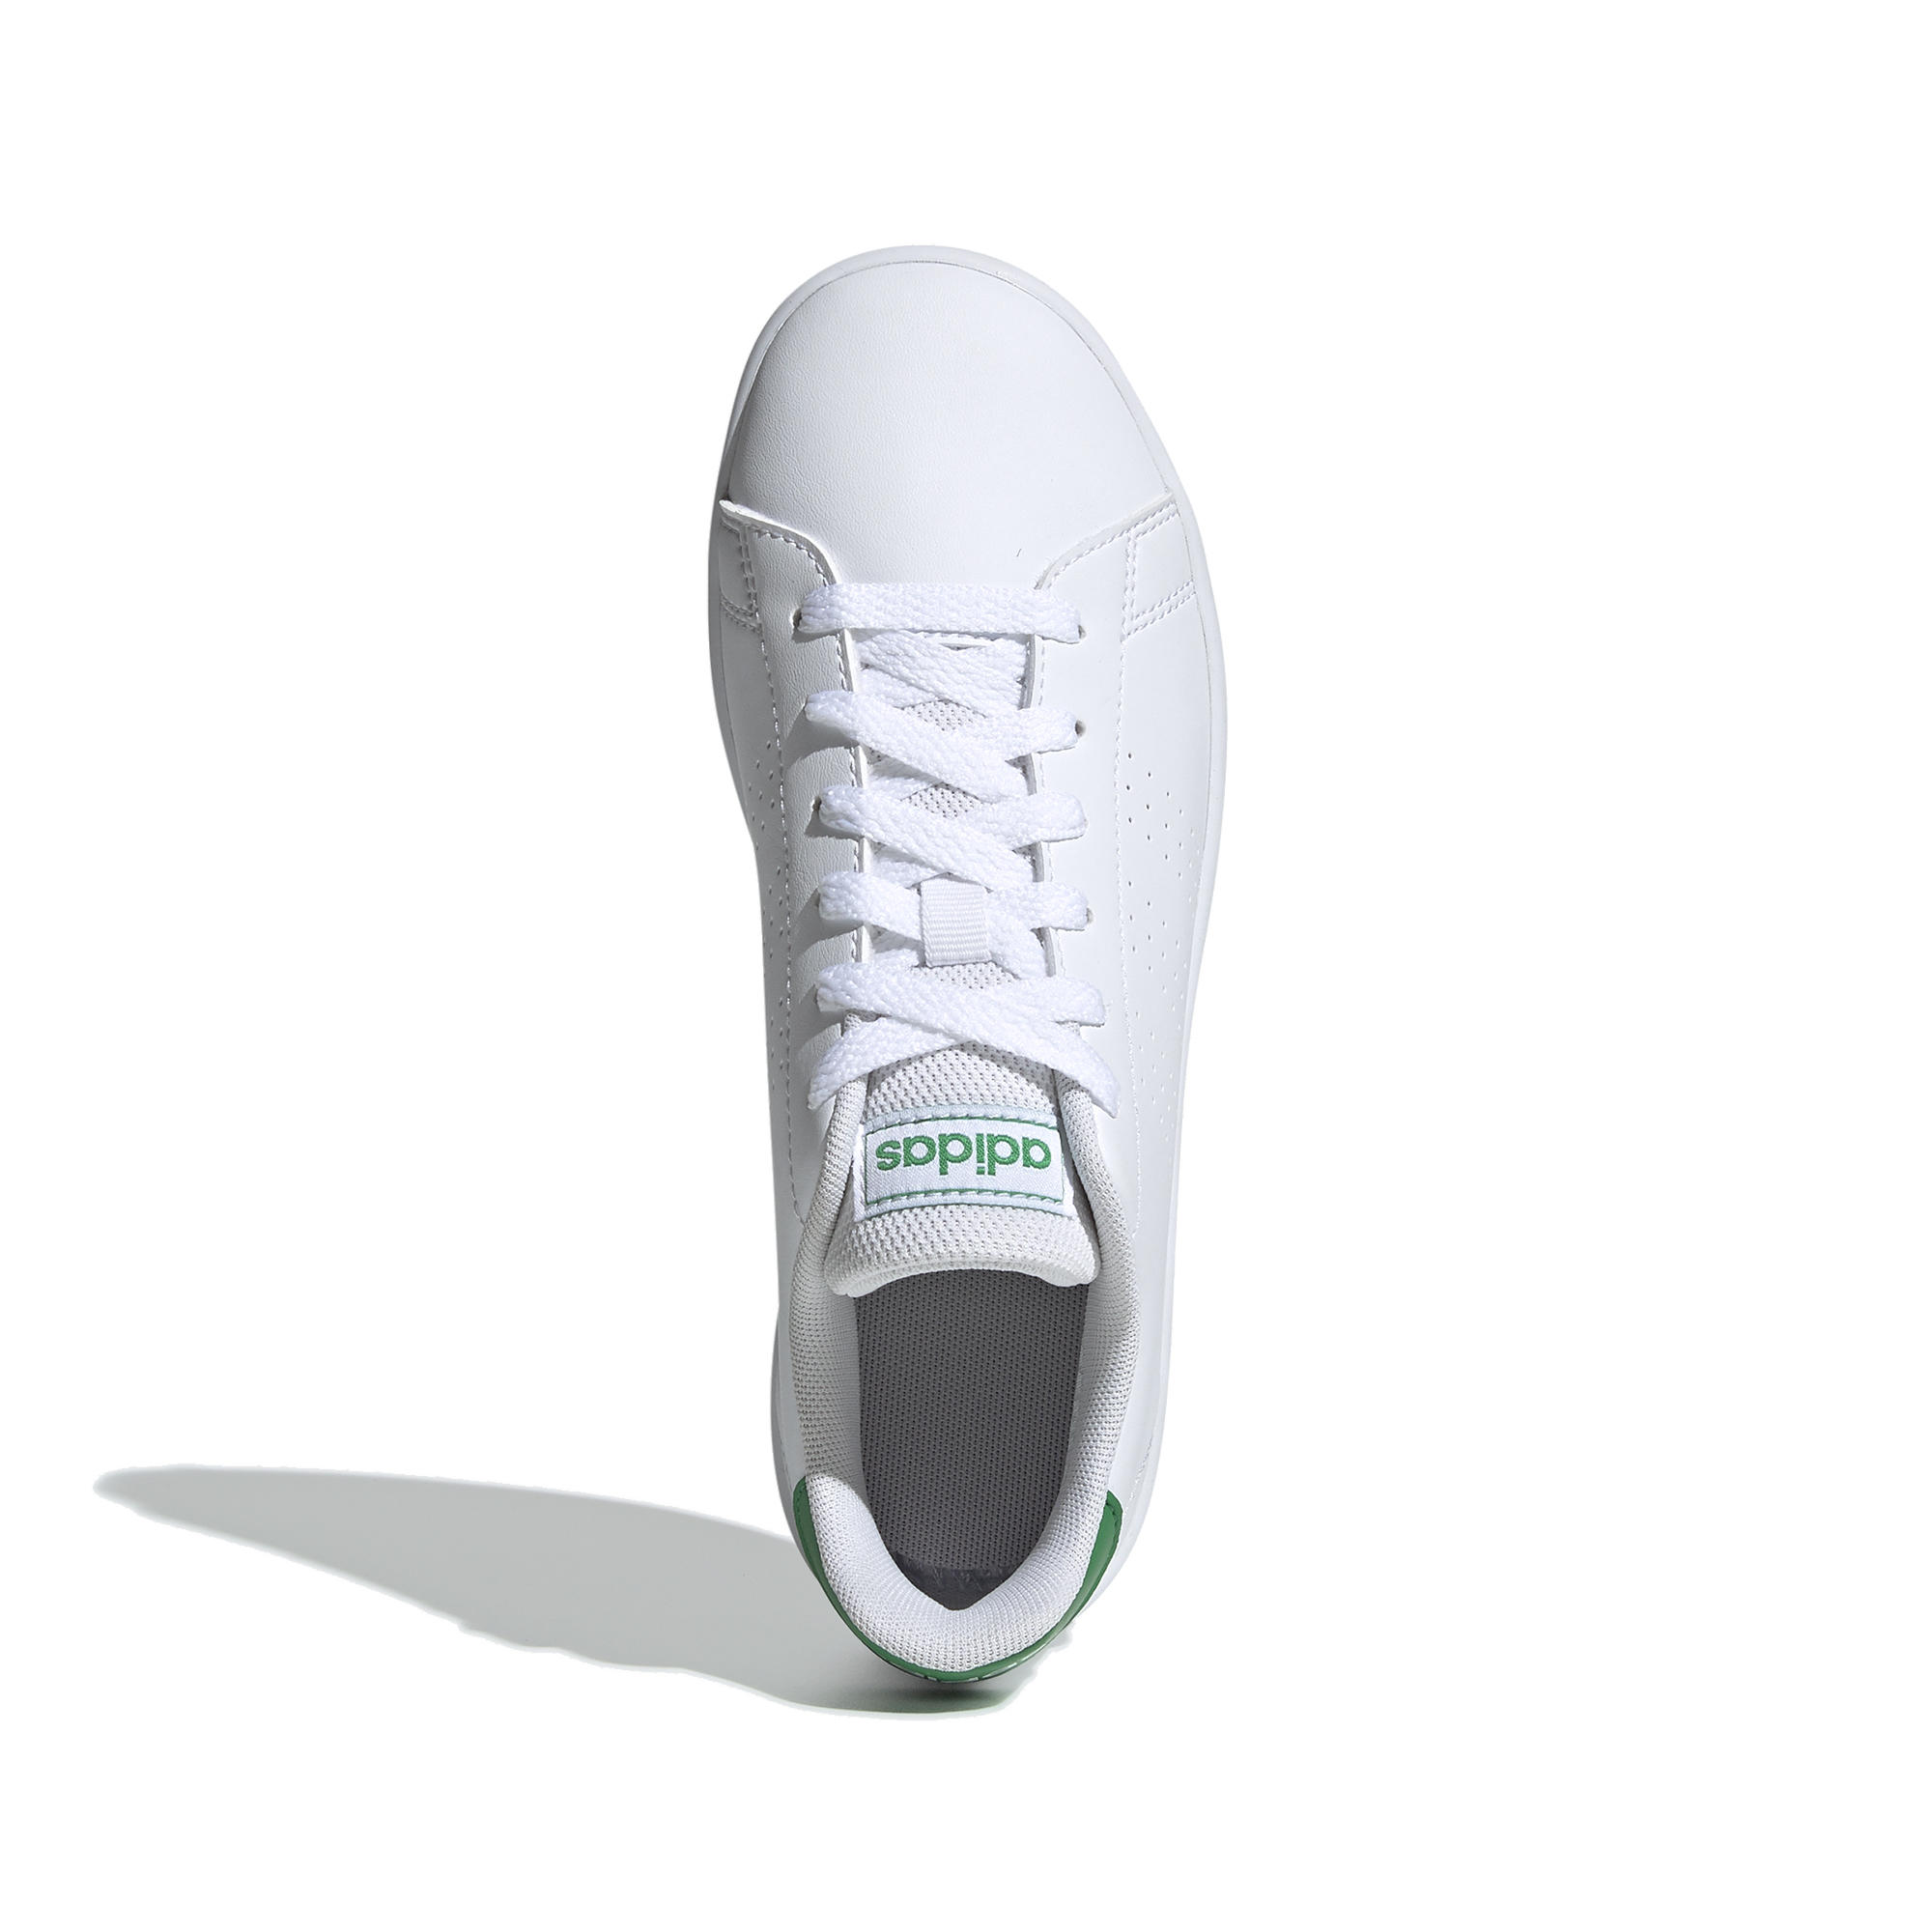 Advantage Clean Kids' Tennis Shoes - White/Green - Decathlon